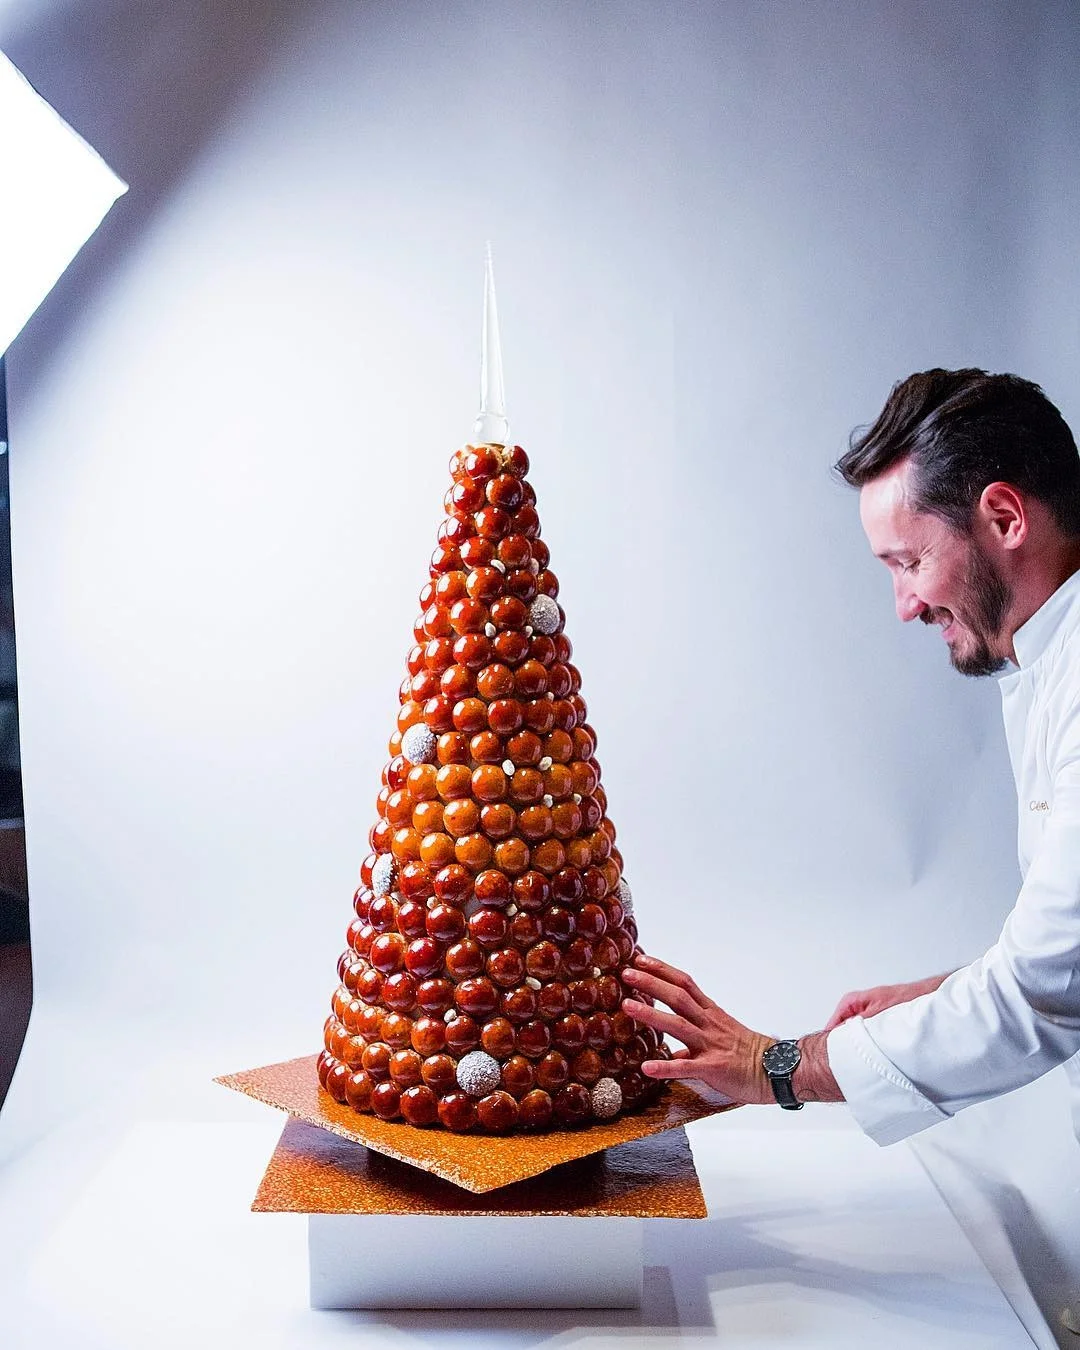 Талантливый кондитер поразил мир фантастическими десертами - фото 343358